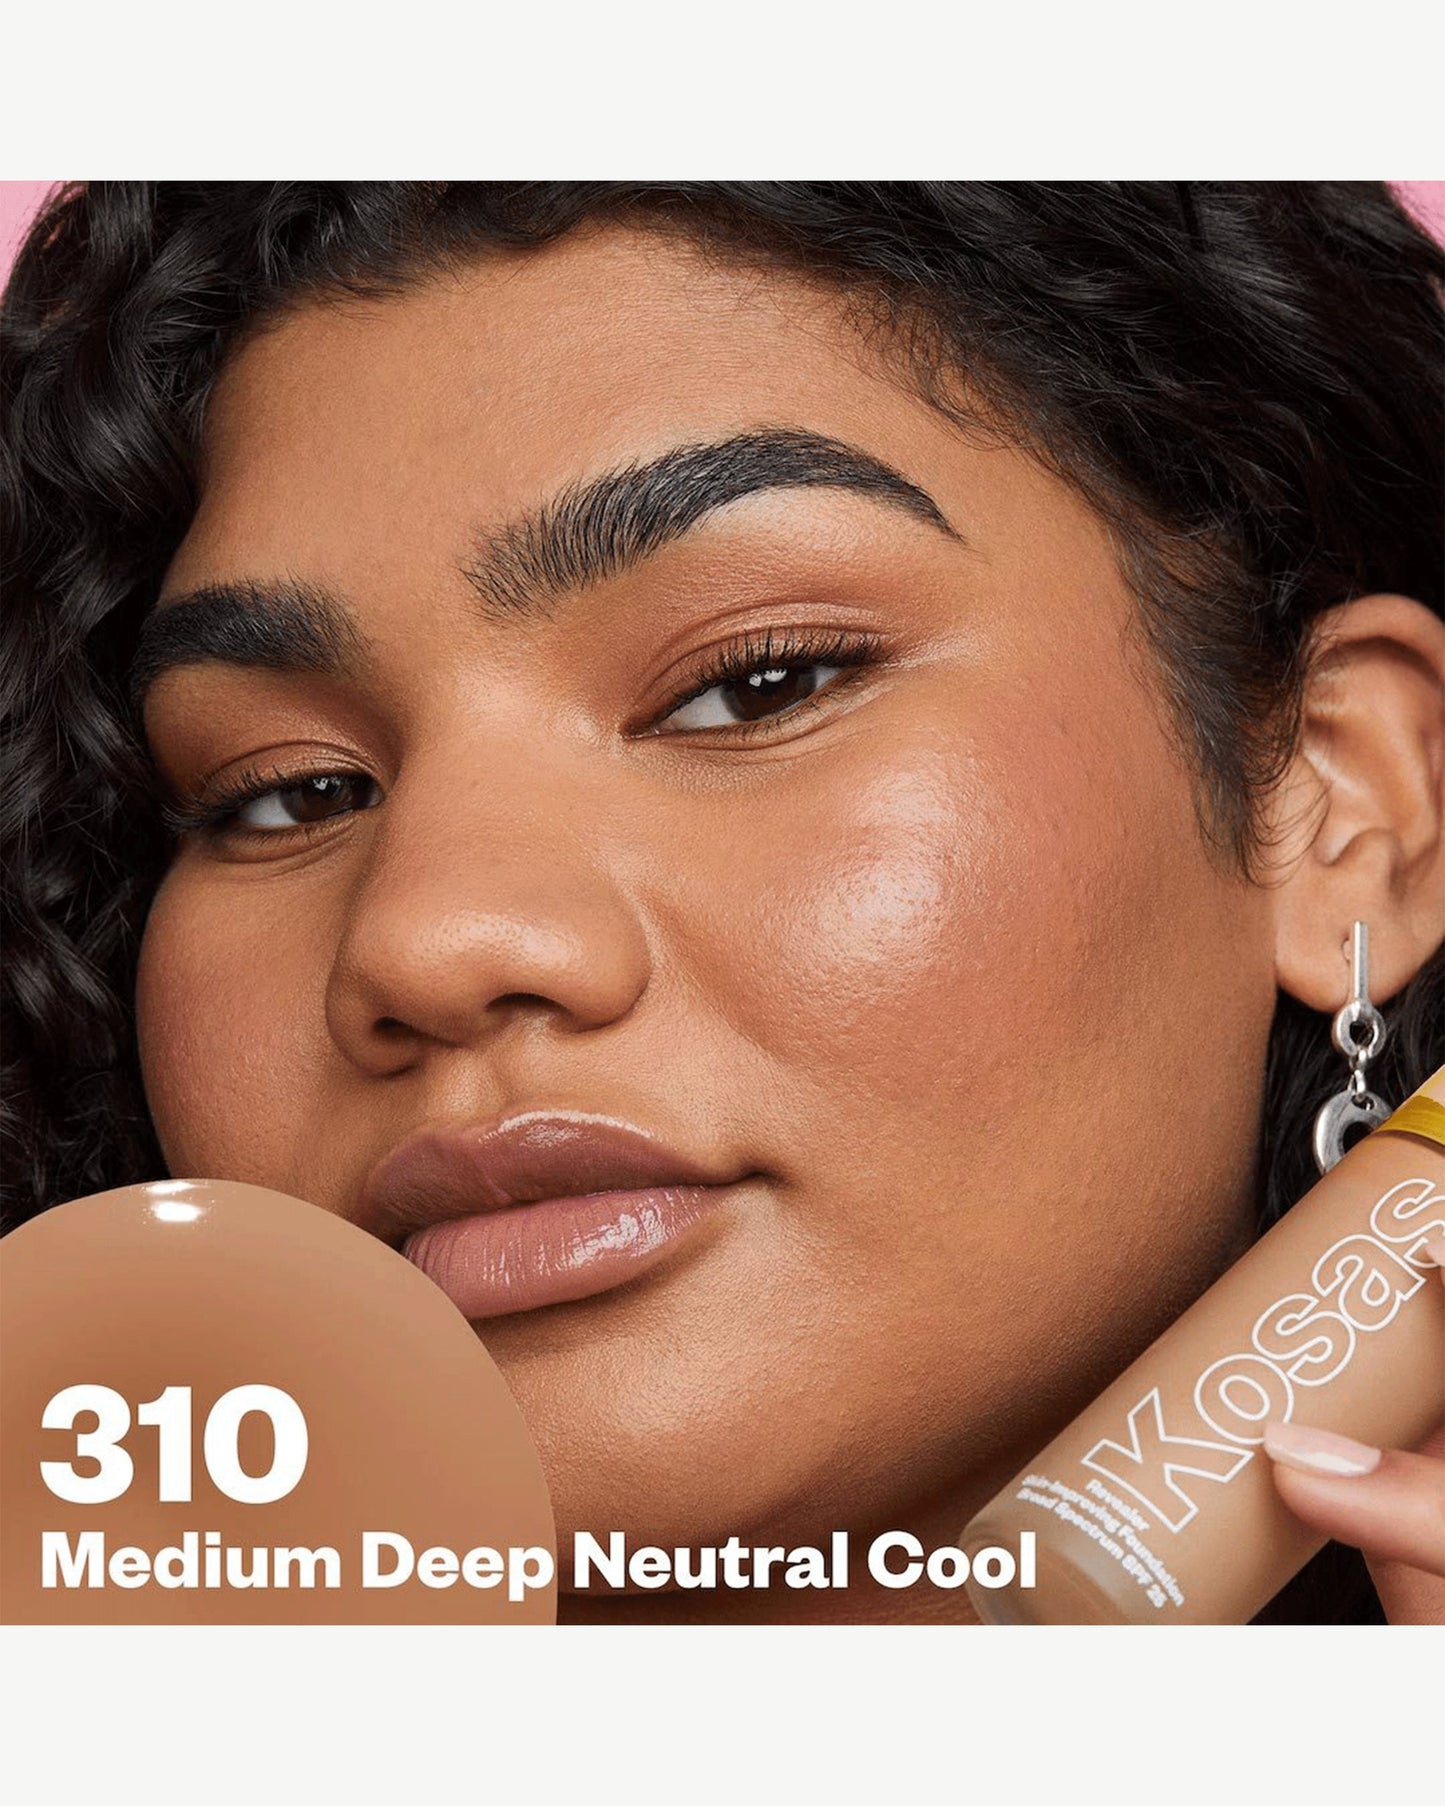 Medium Deep Neutral Cool 310 (medium deep with pink peach undertones)